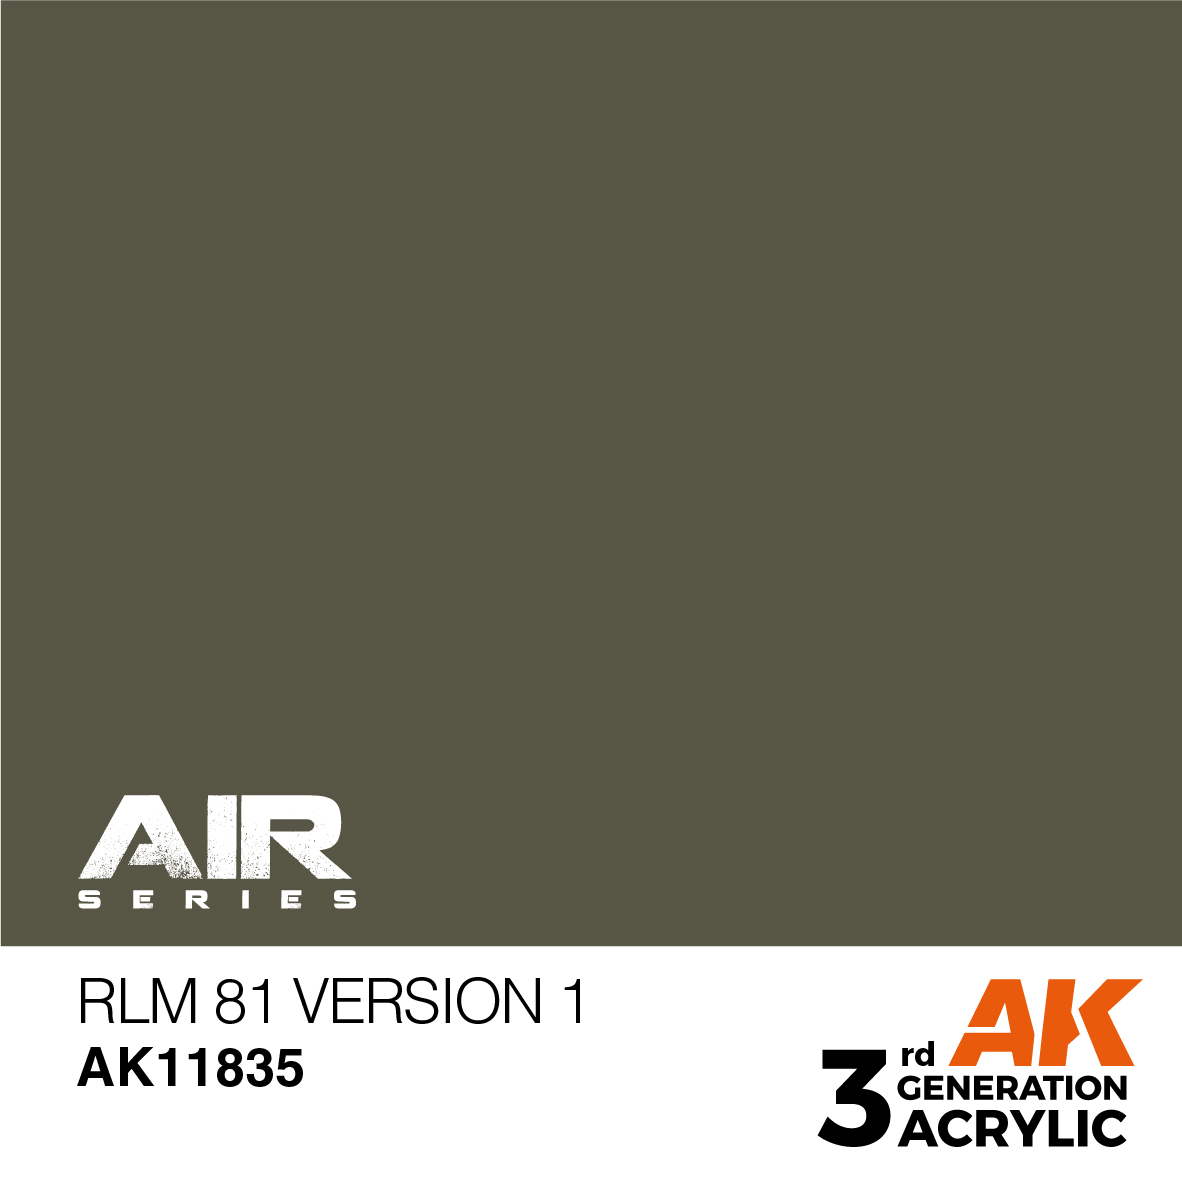 RLM 81 Version 1 – AIR